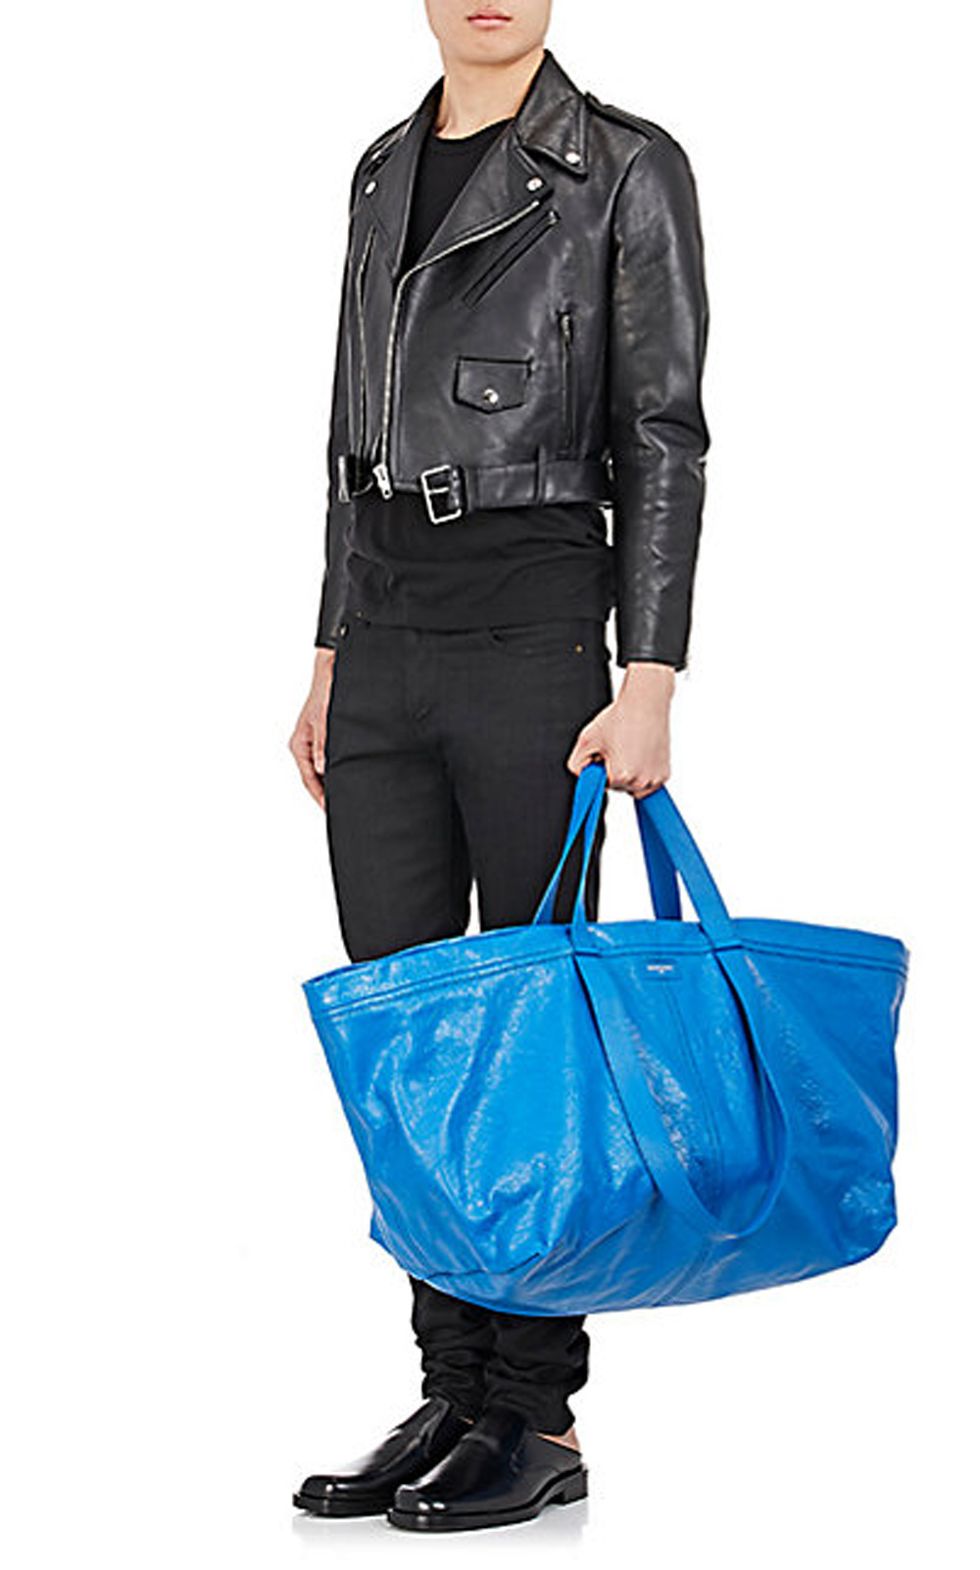 Leather, Clothing, Cobalt blue, Electric blue, Bag, Turquoise, Blue, Leather jacket, Jacket, Handbag, 